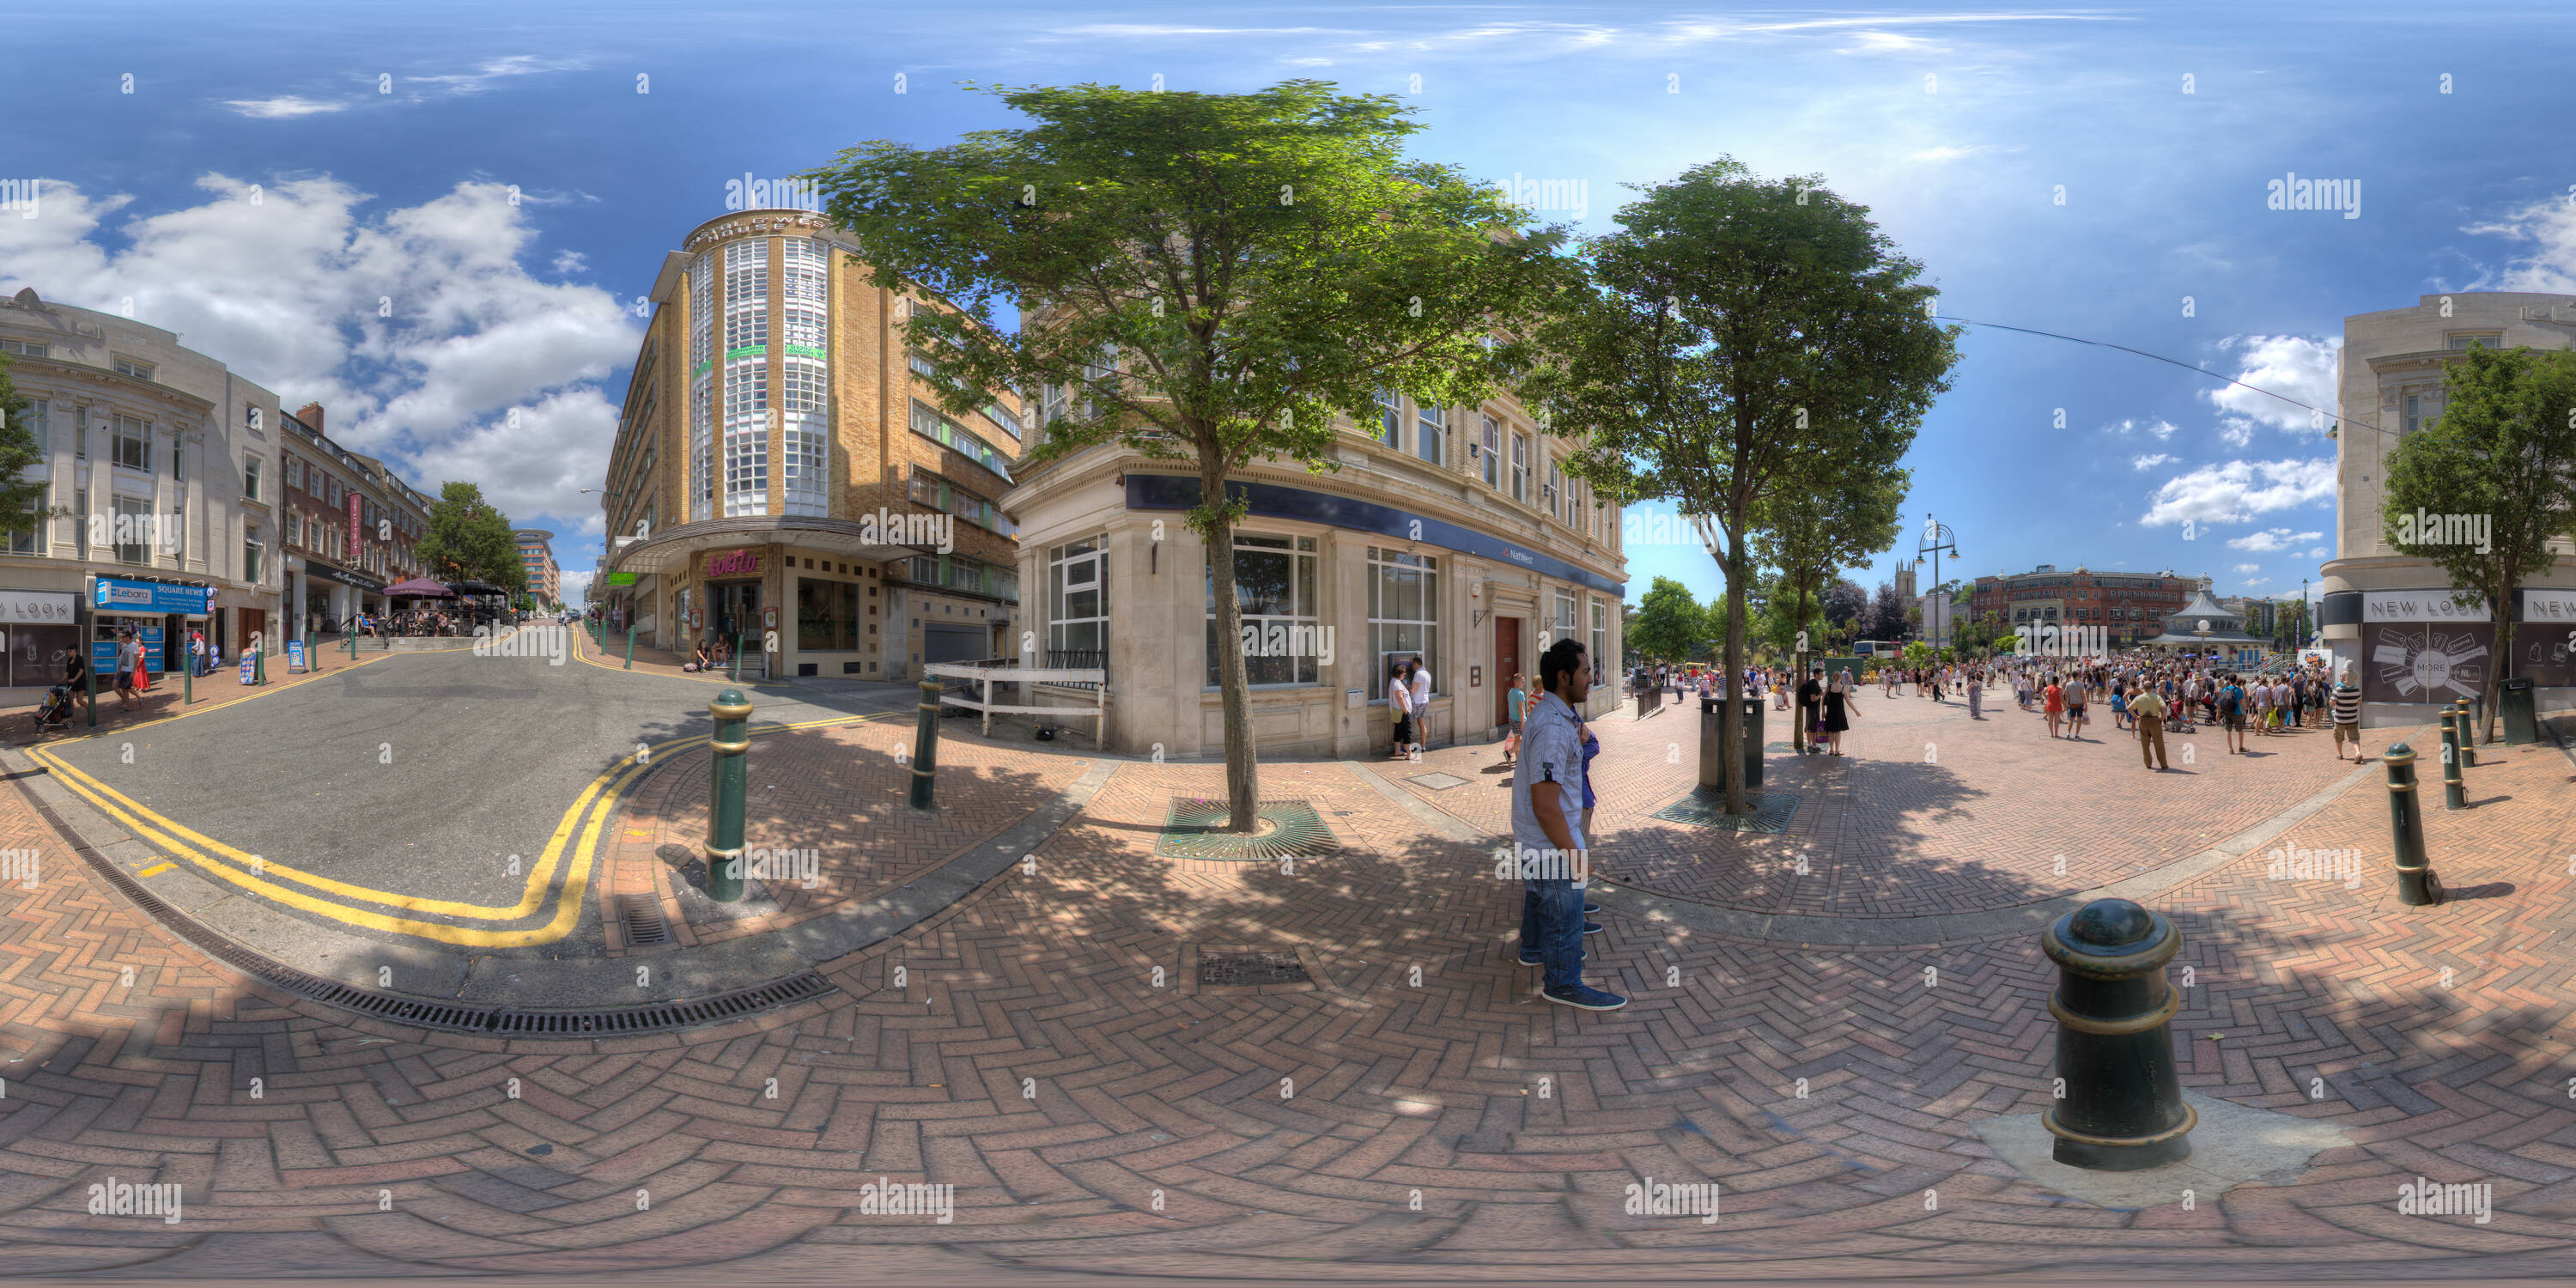 360 degree panoramic view of Bournemouth Square